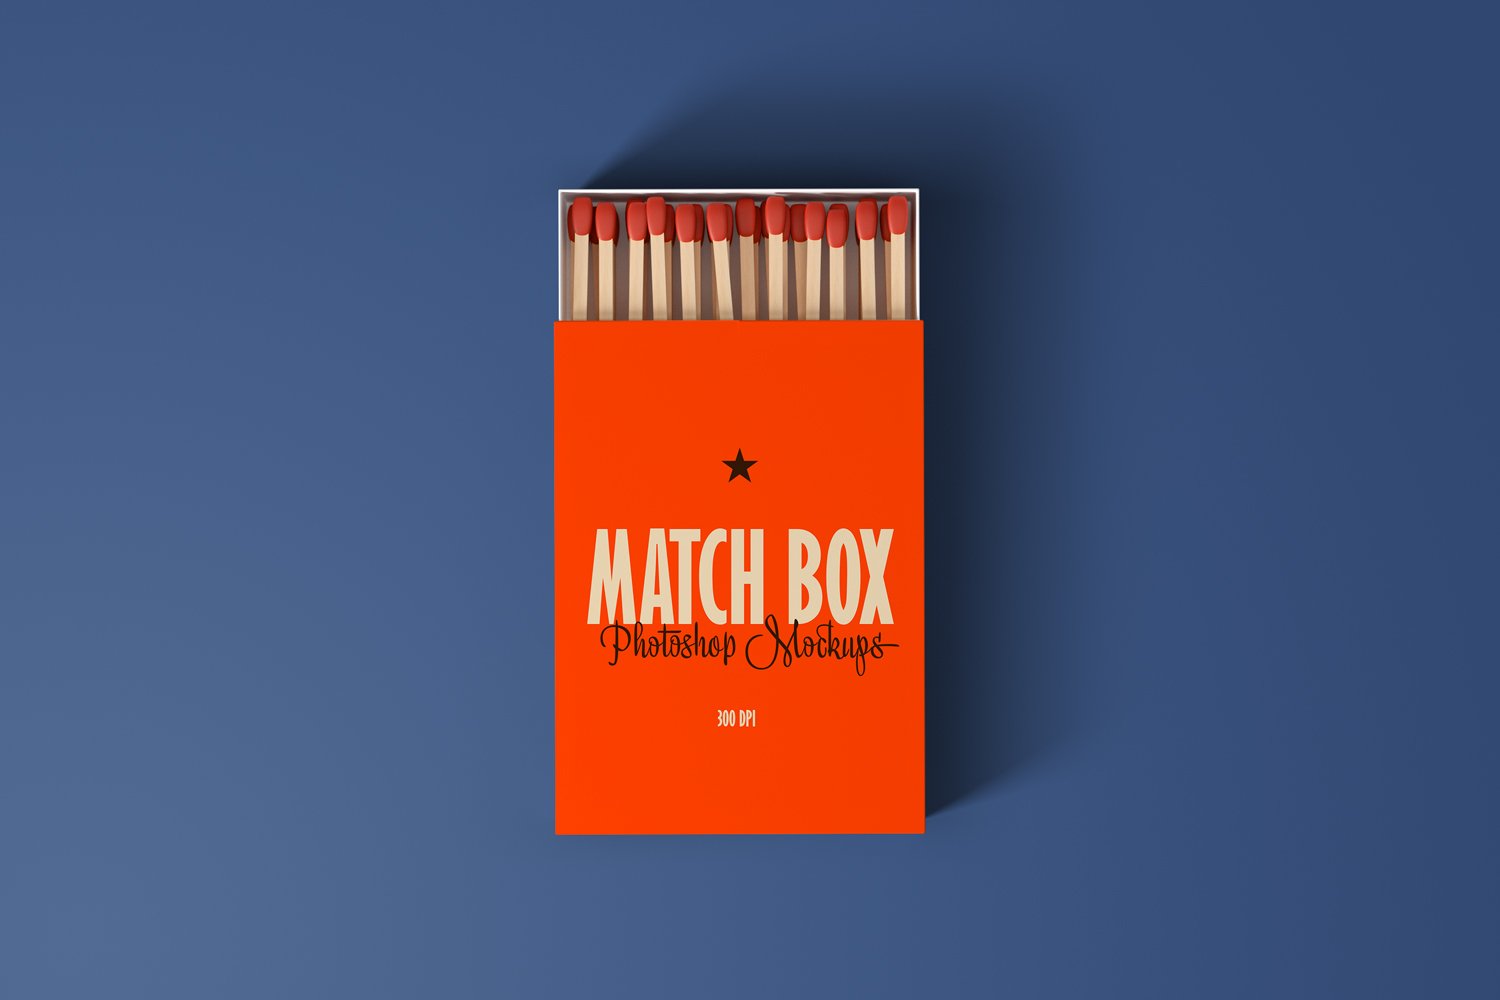 03 matches box photoshop mockups 934